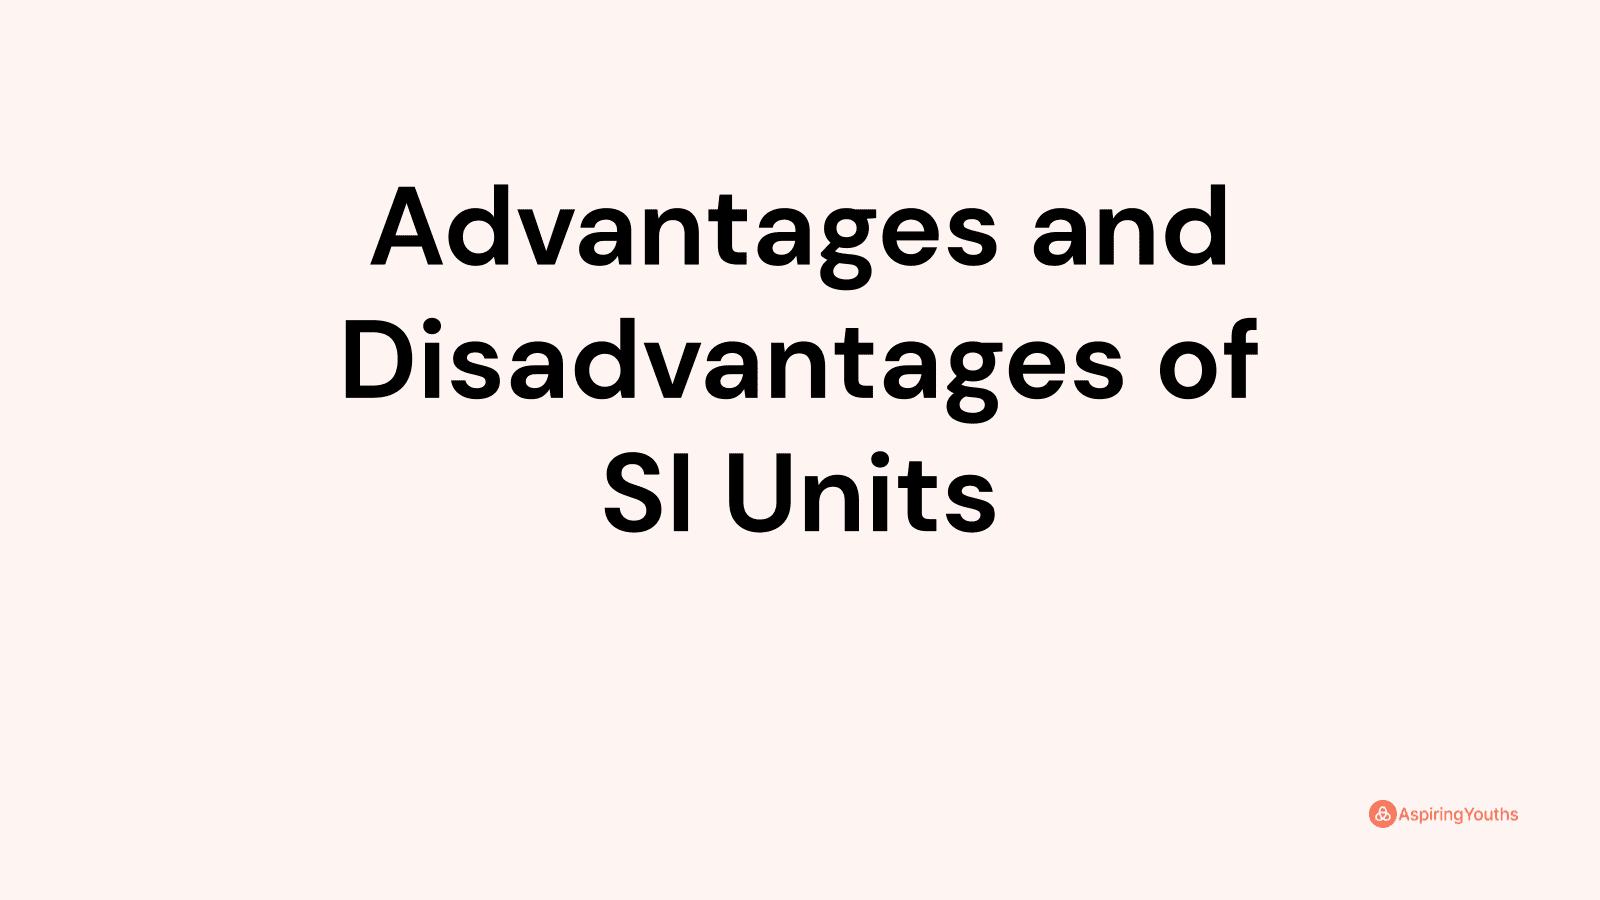 Advantages and disadvantages of SI Units